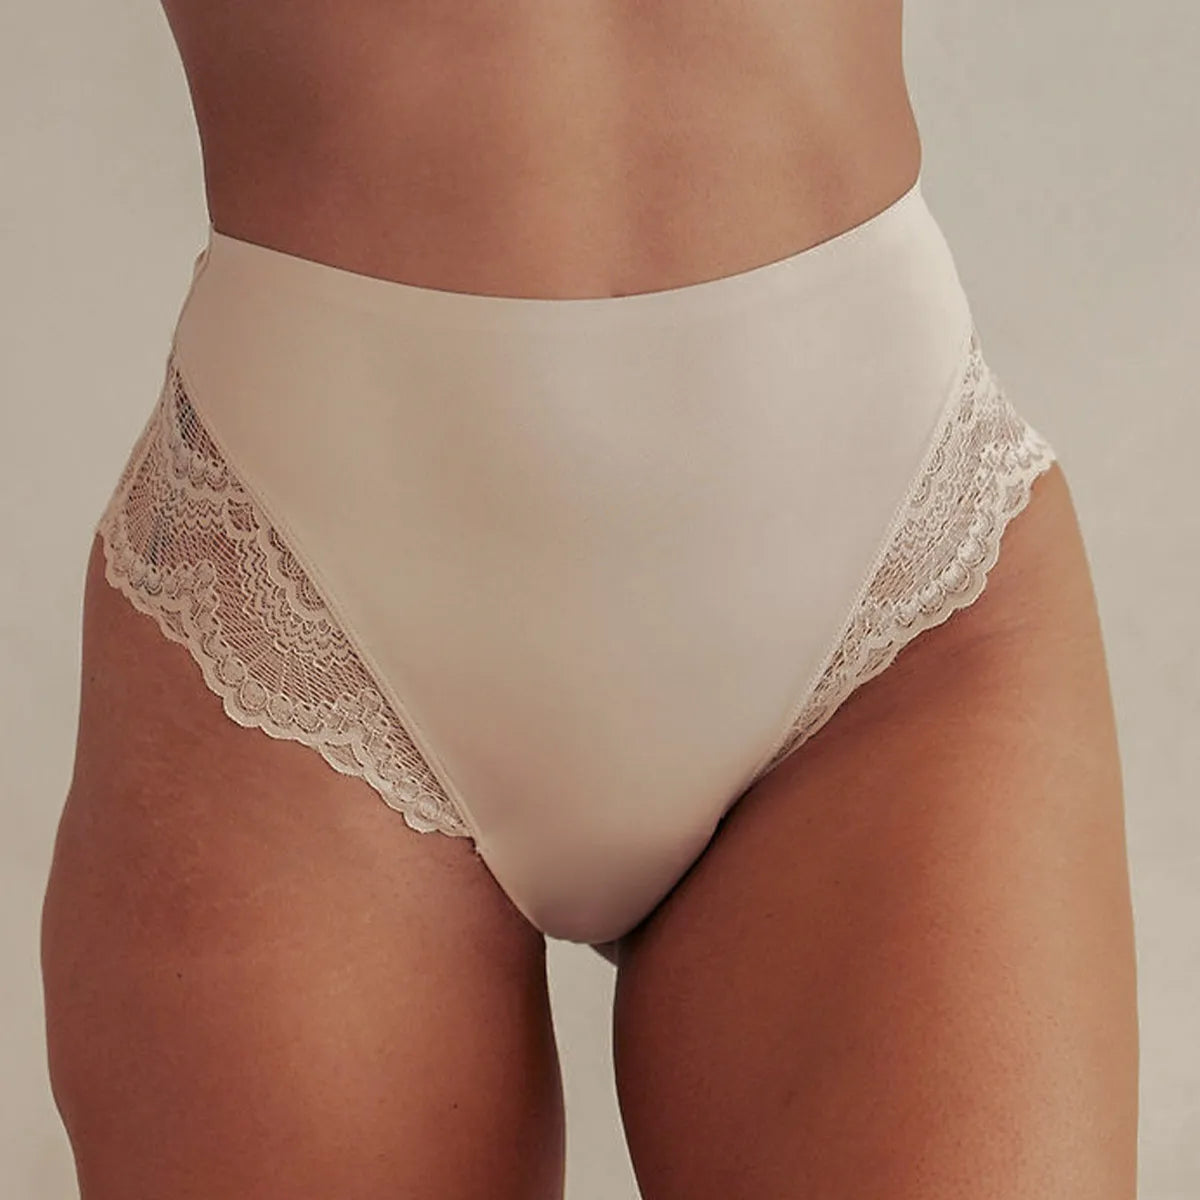 Soma Vanishing Edge Microfiber with Lace Hipster Underwear, White/Ivory,  size XXL